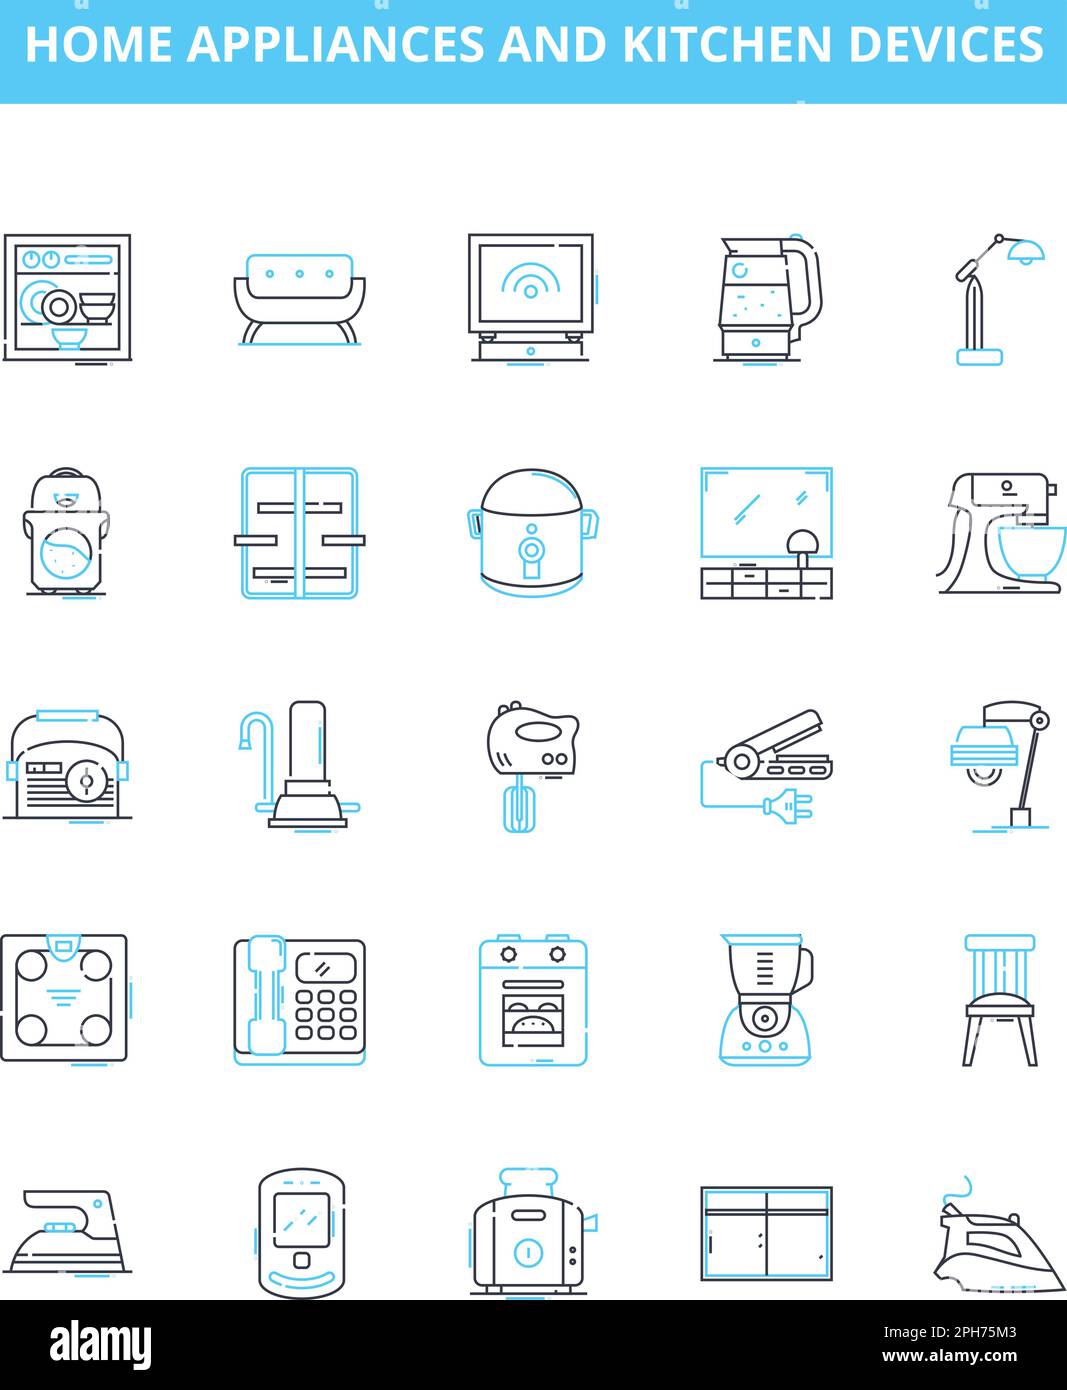 Home appliances and kitchen devices vector line icons set. Stove, Microwave, Kettle, Toaster, Dishwasher, Refrigerator, Blender illustration outline Stock Vector